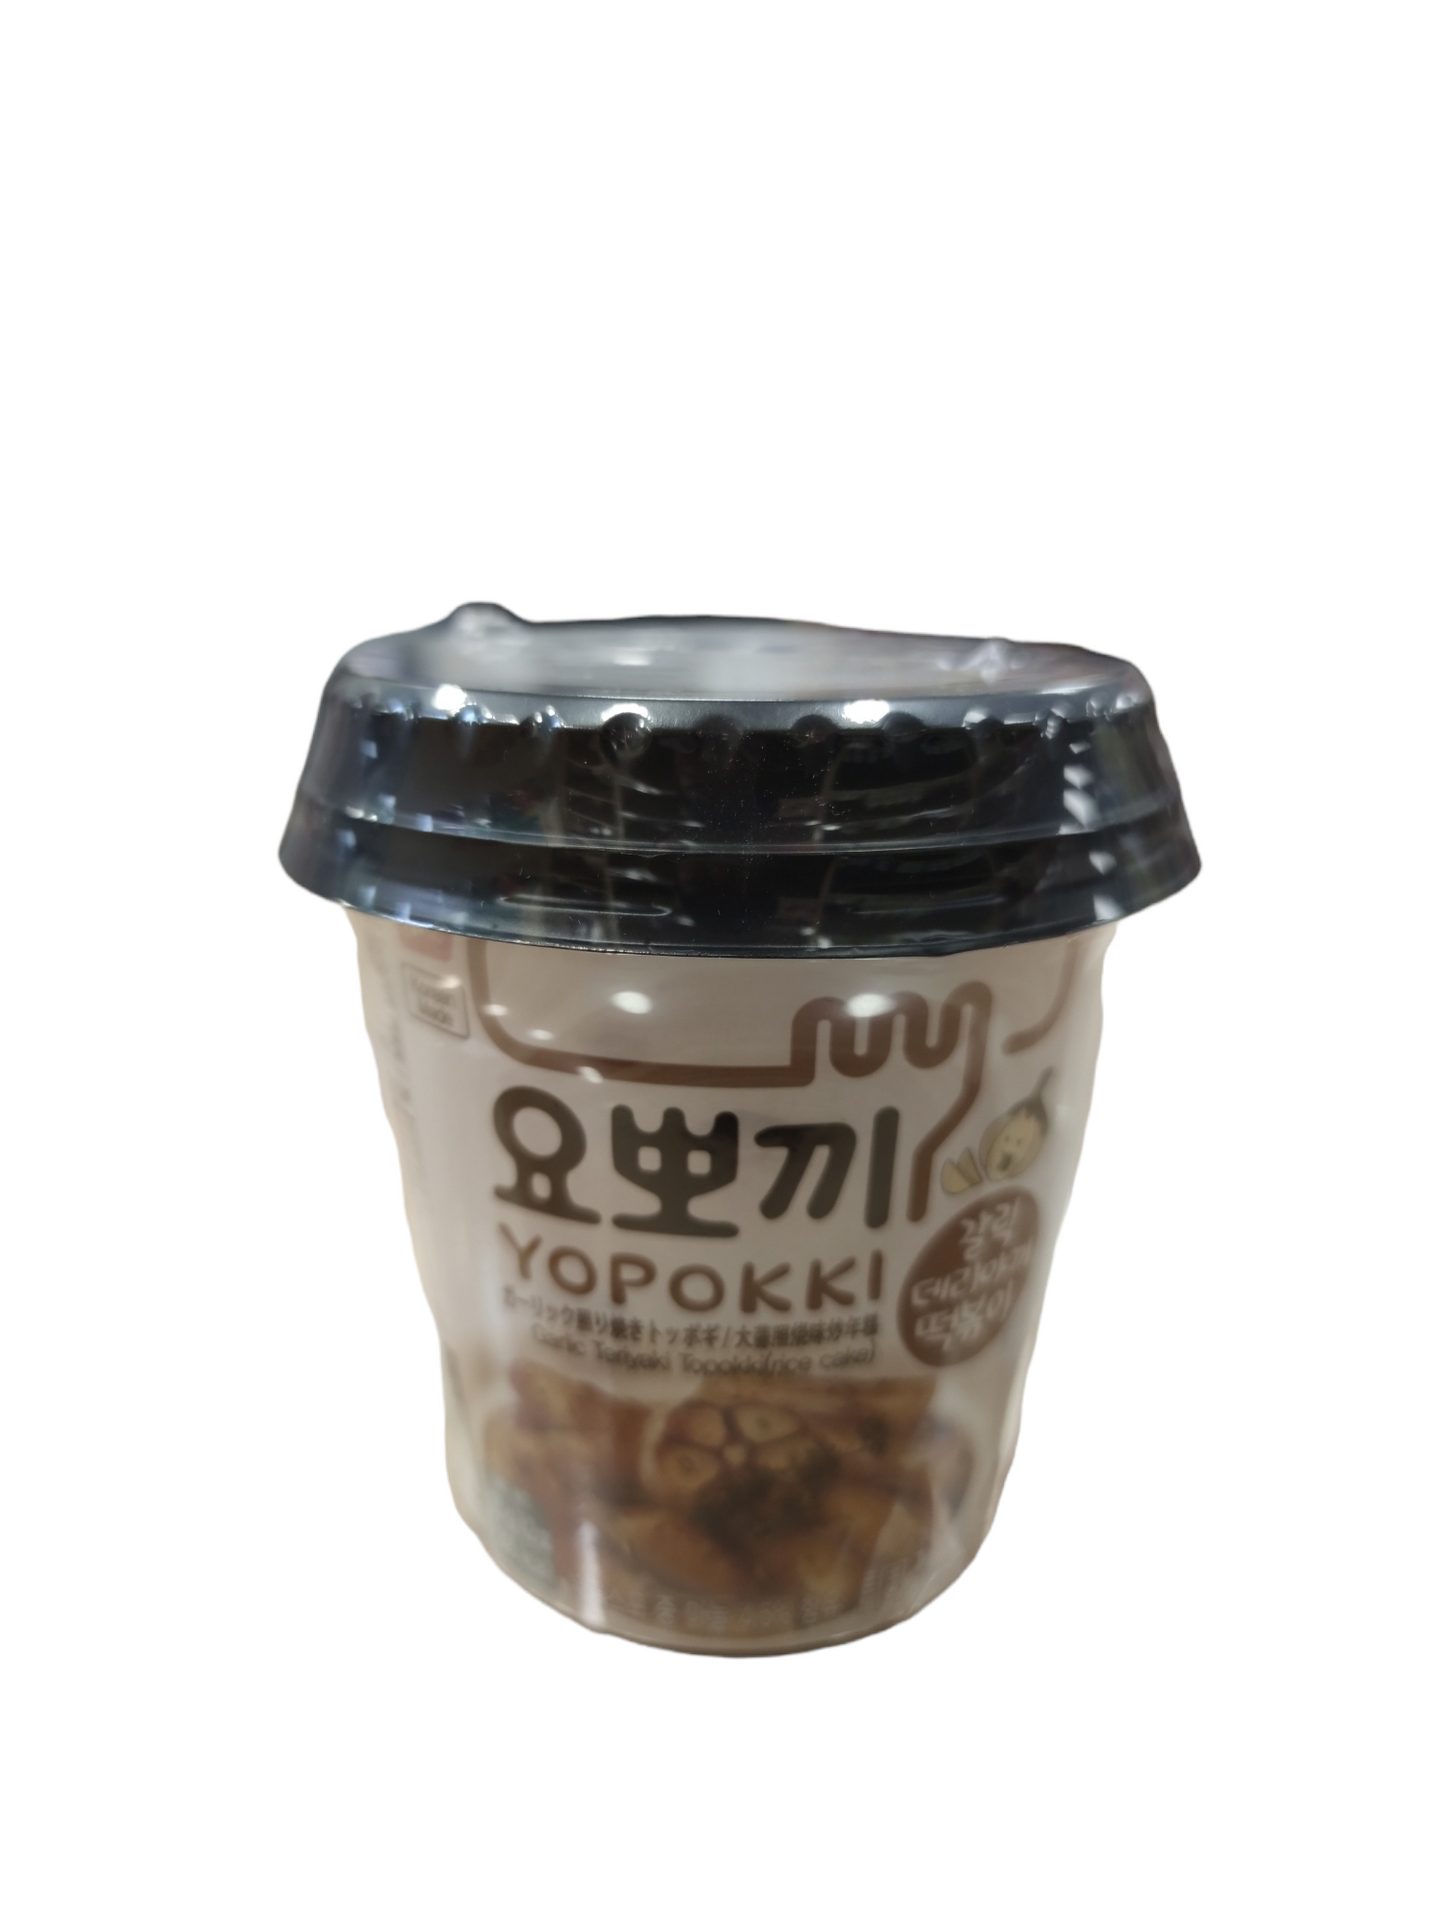 Yopokki Instant Rice Cake Cup (Garlic Teriyaki) 120g